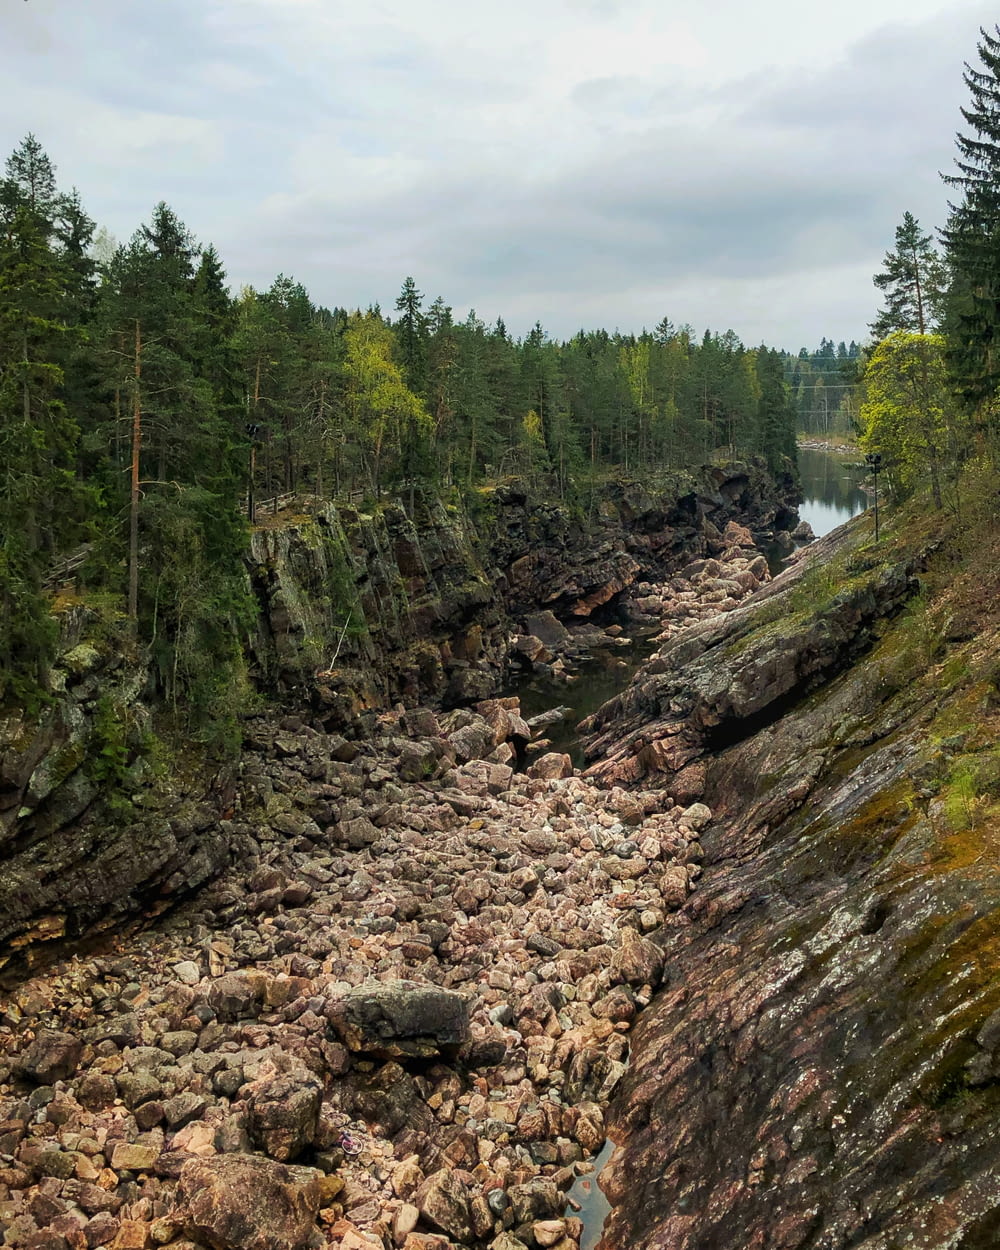 a rocky river runs through a forested area